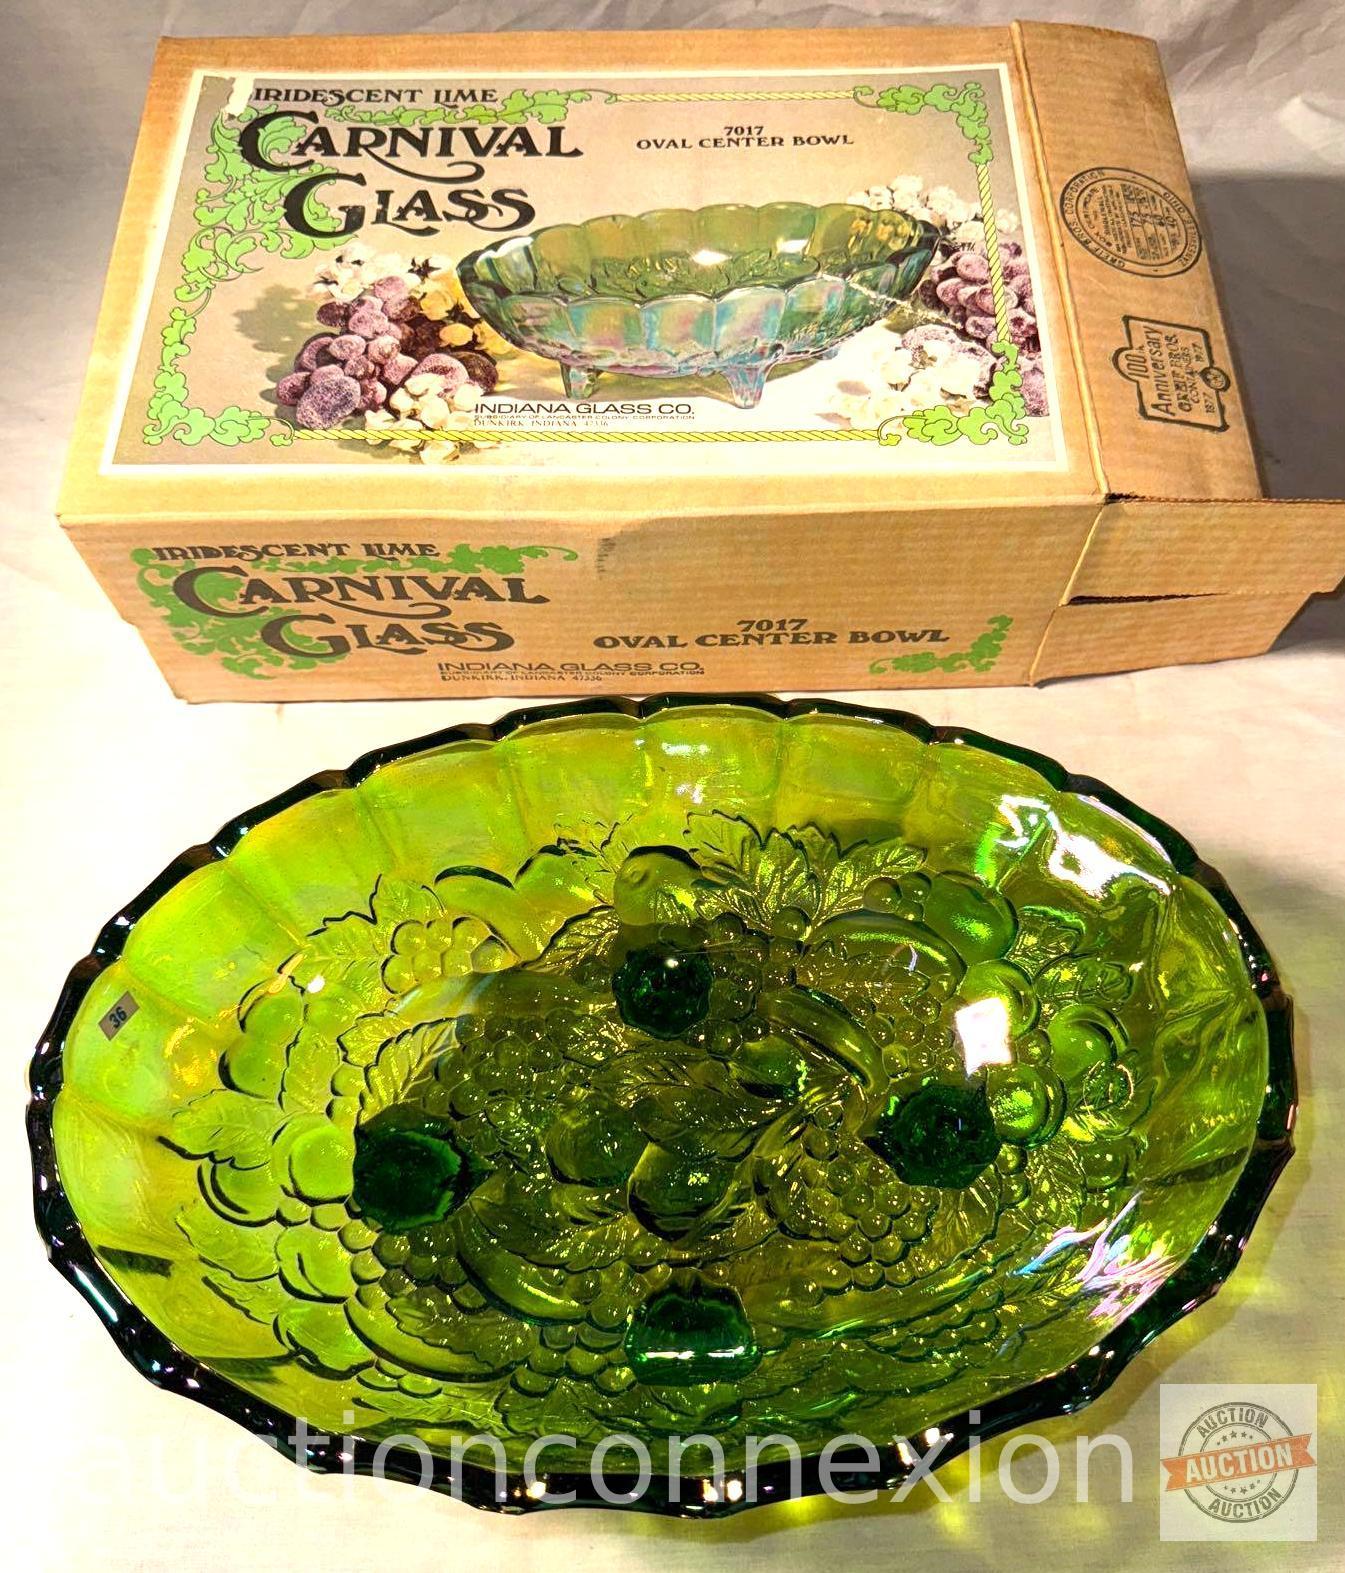 Carnival Glass, 1970's Green oval center bowl in original box